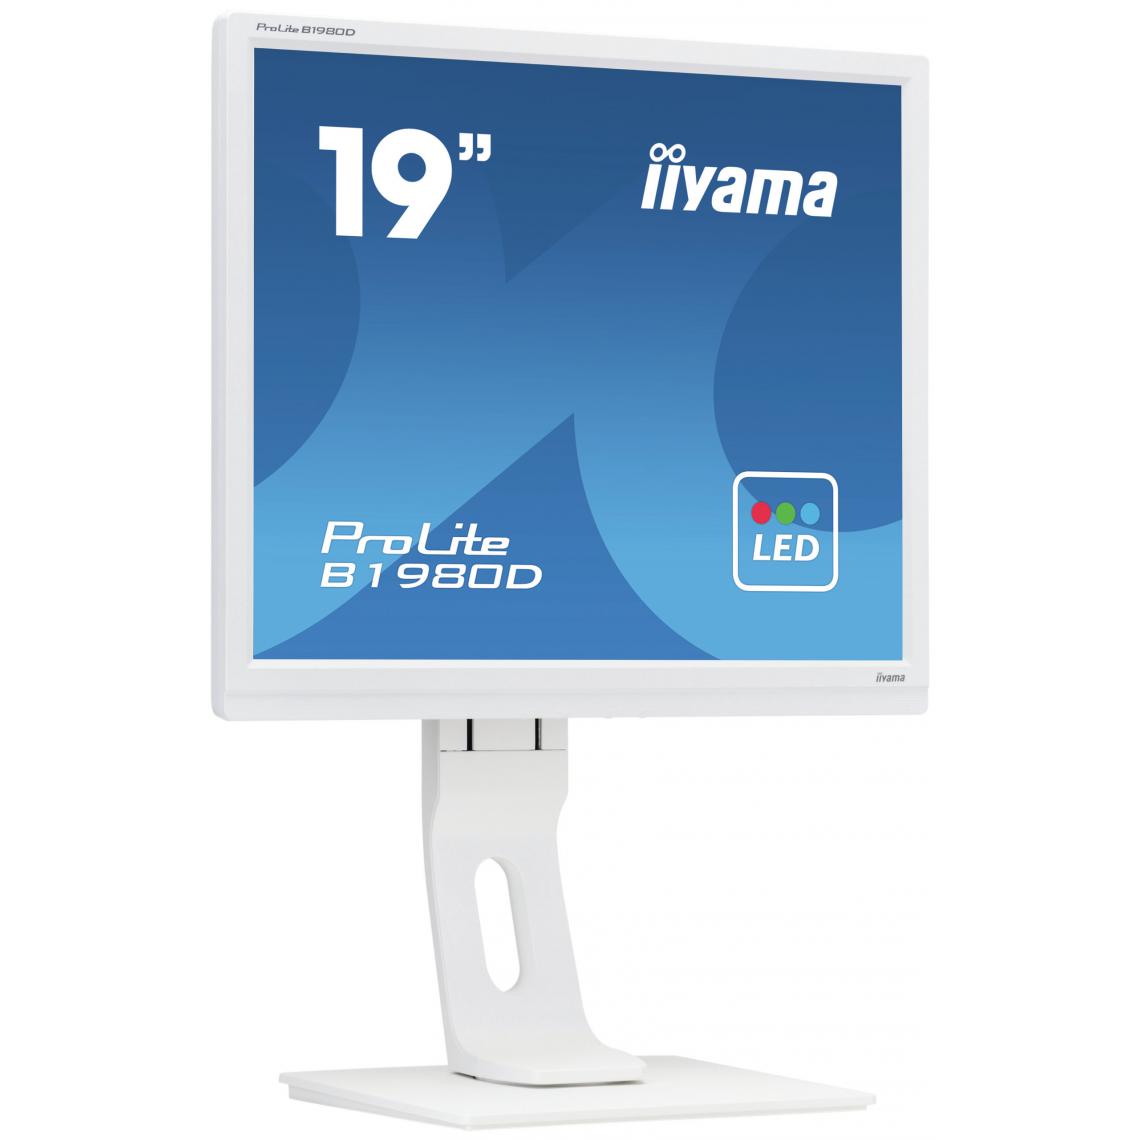 Iiyama - Ecran 19'' Blanc LED 5:4 1280x1024 5ms 250 cd/m VGA DVI réglable haute - Moniteur PC